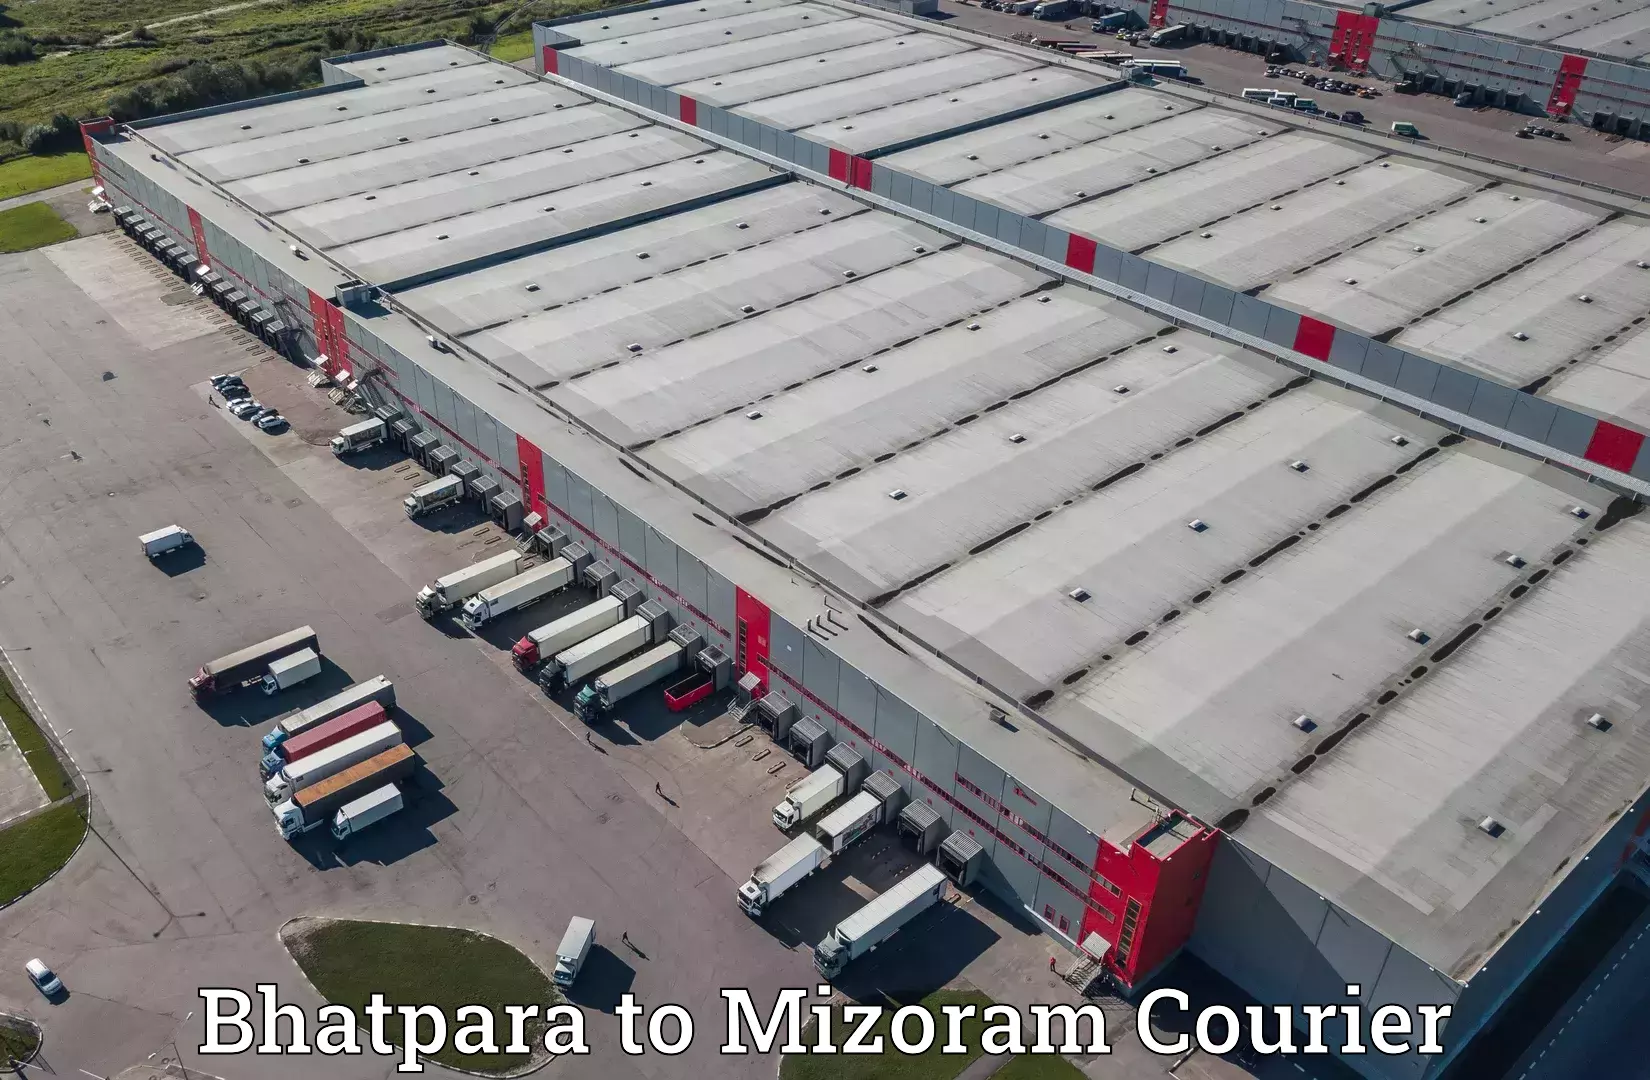 Courier service comparison Bhatpara to Mizoram